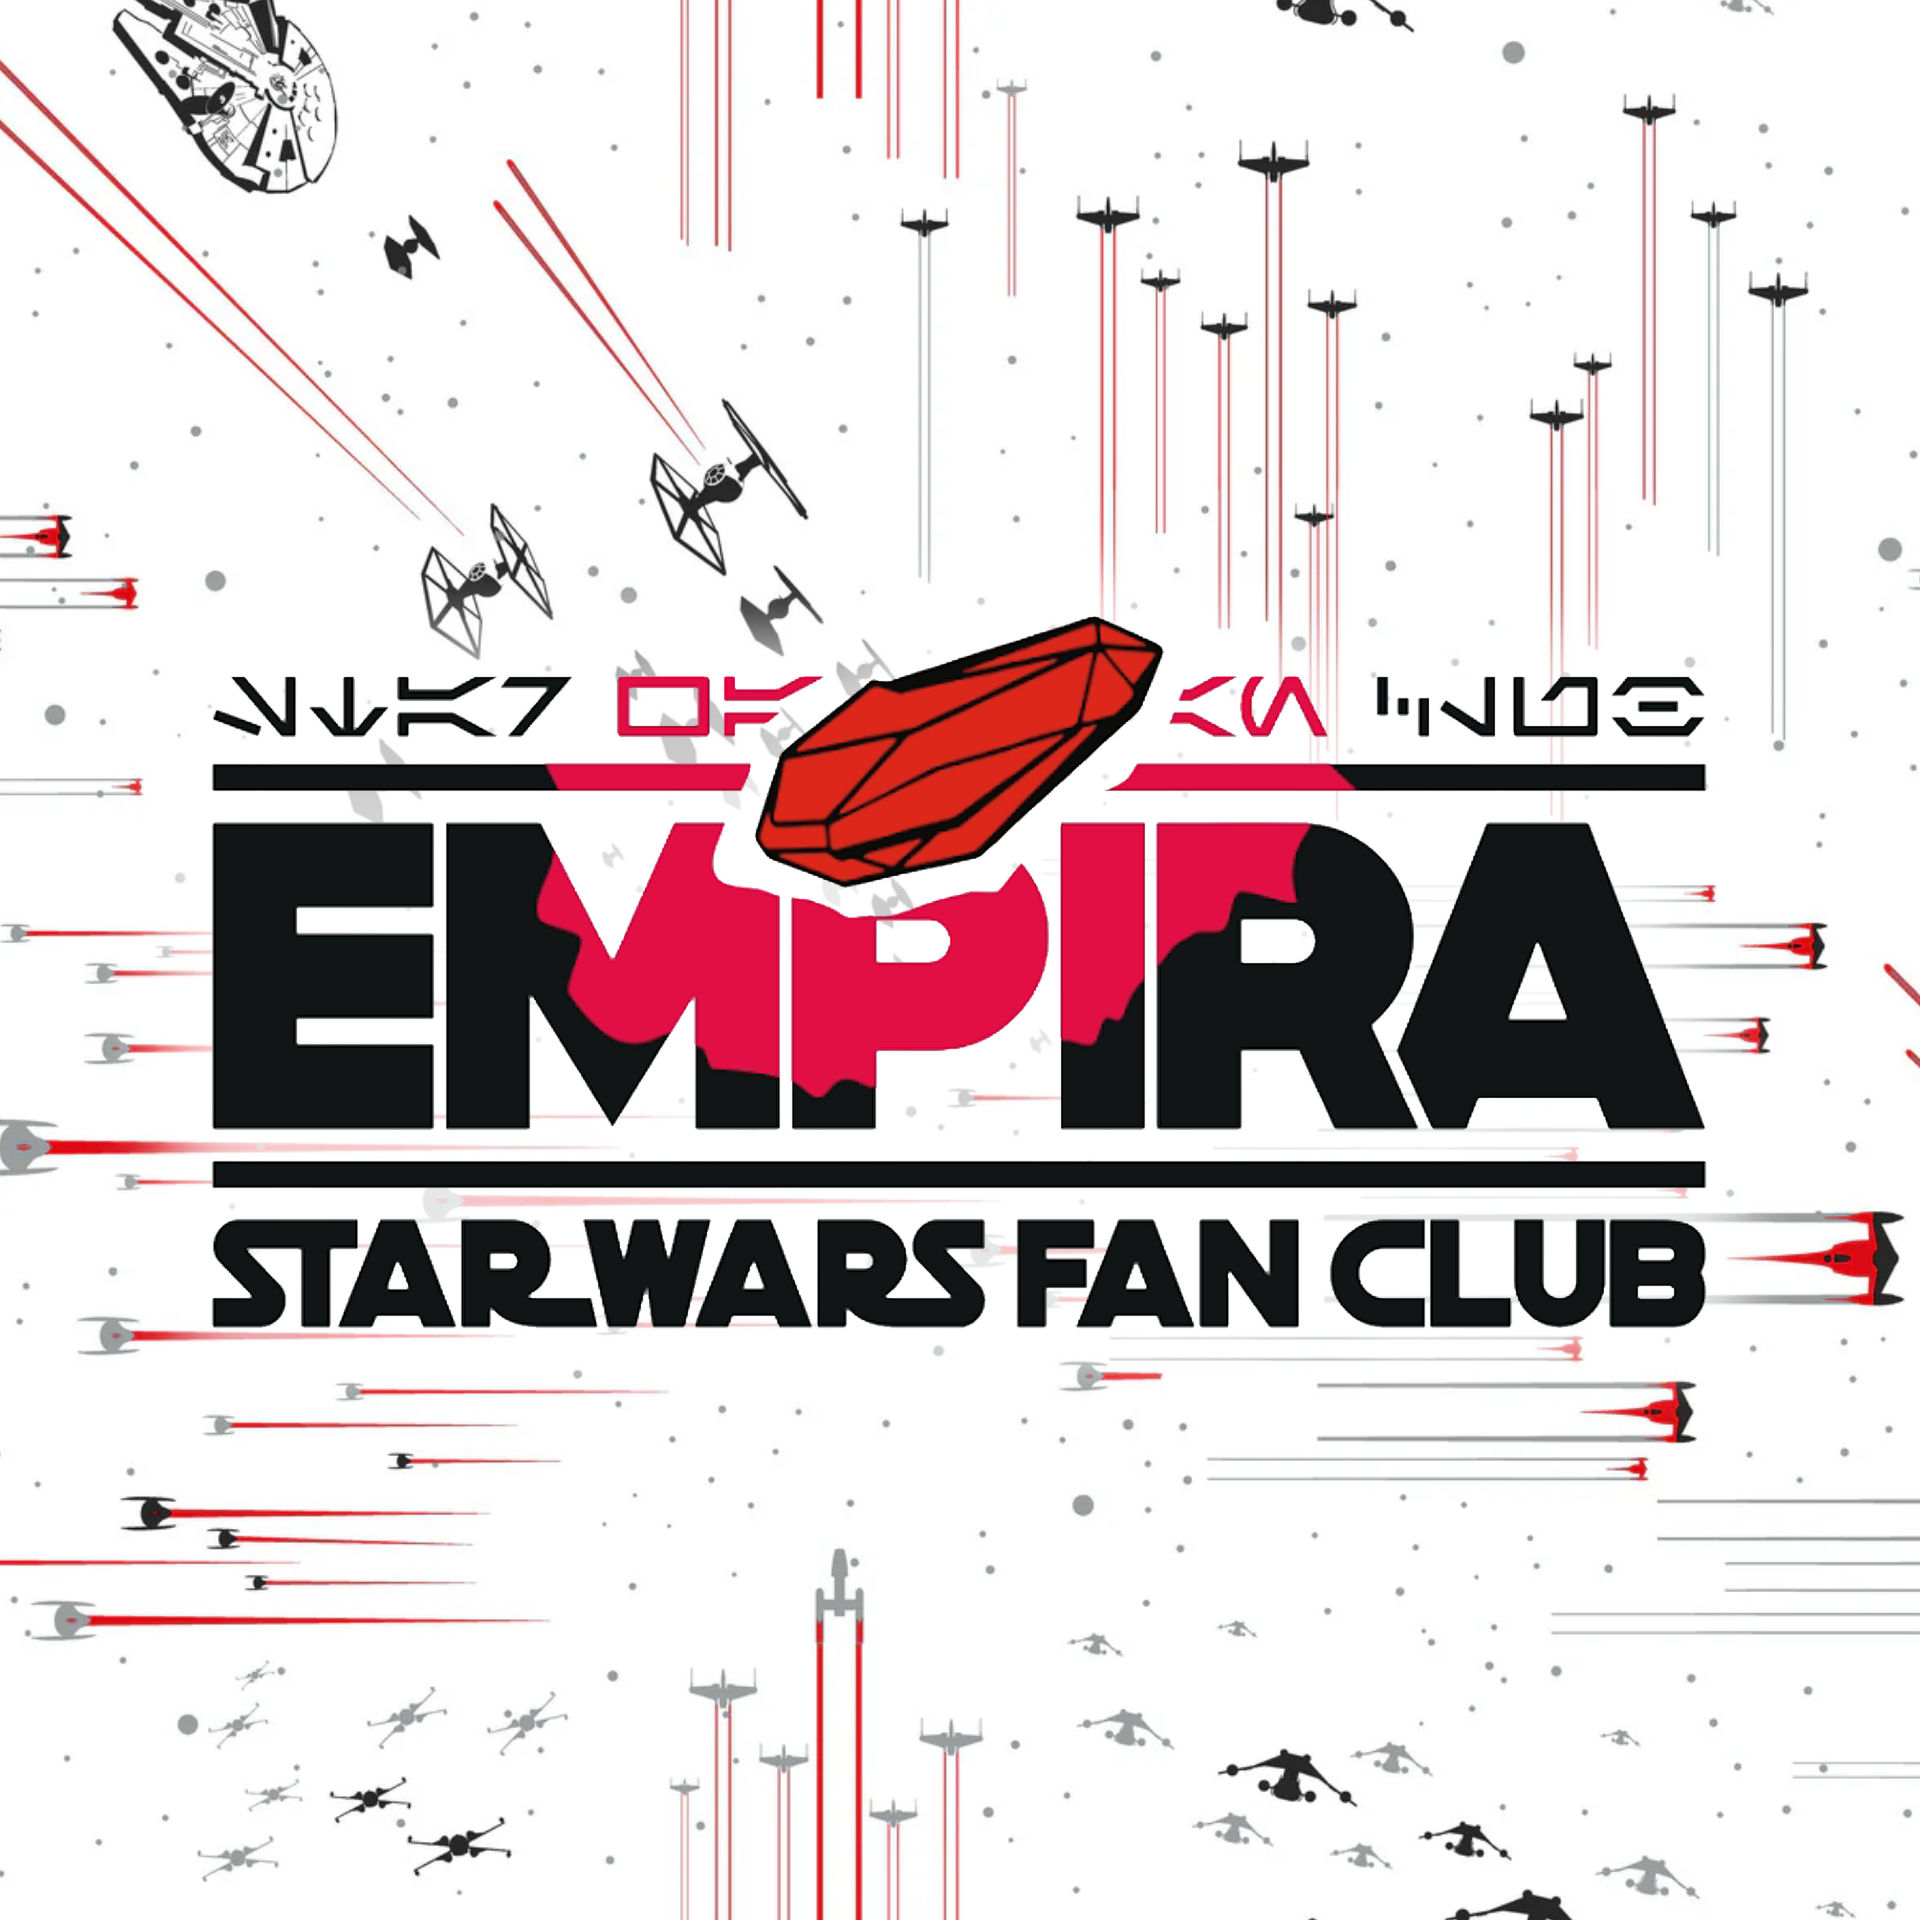 EmpiRa Star Wars Fan Club, da Ravenna ad una galassia lontana lontana…